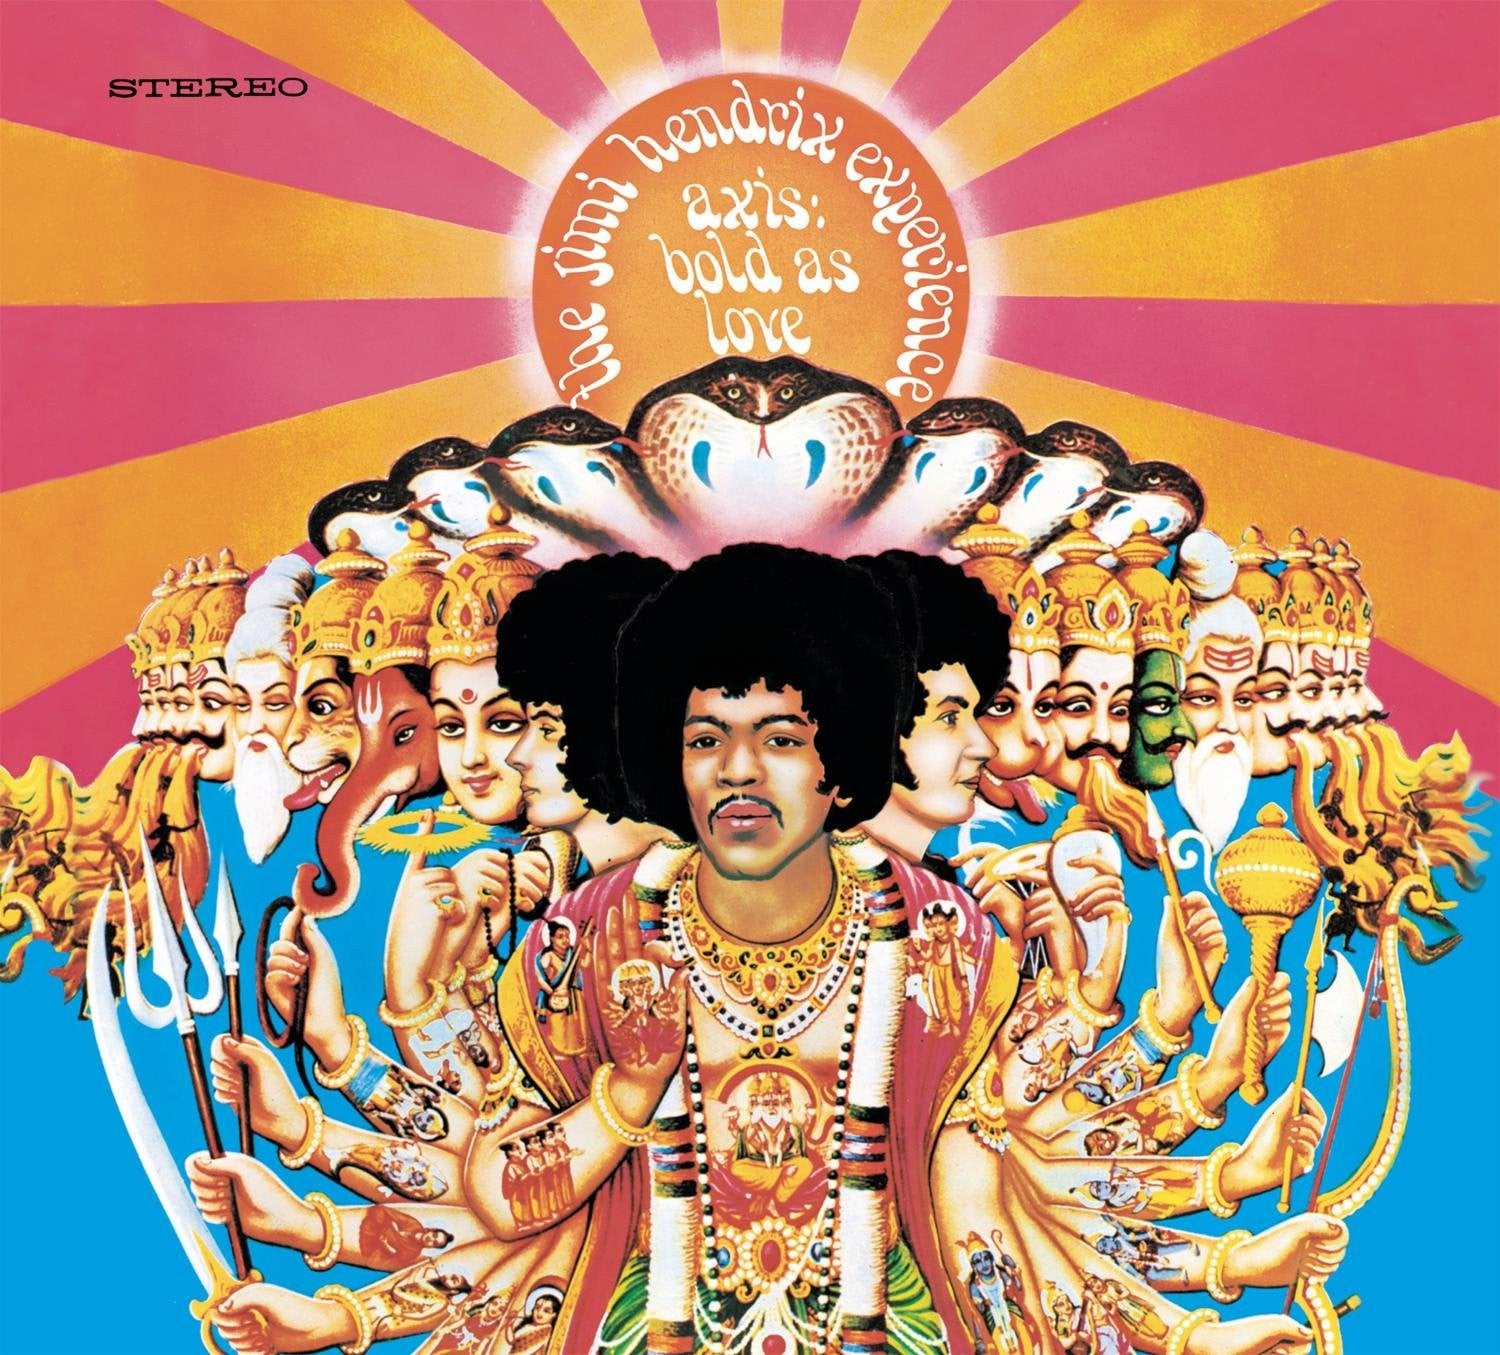 Jimi Hendrix Experience, The - Axis: Bold As Love